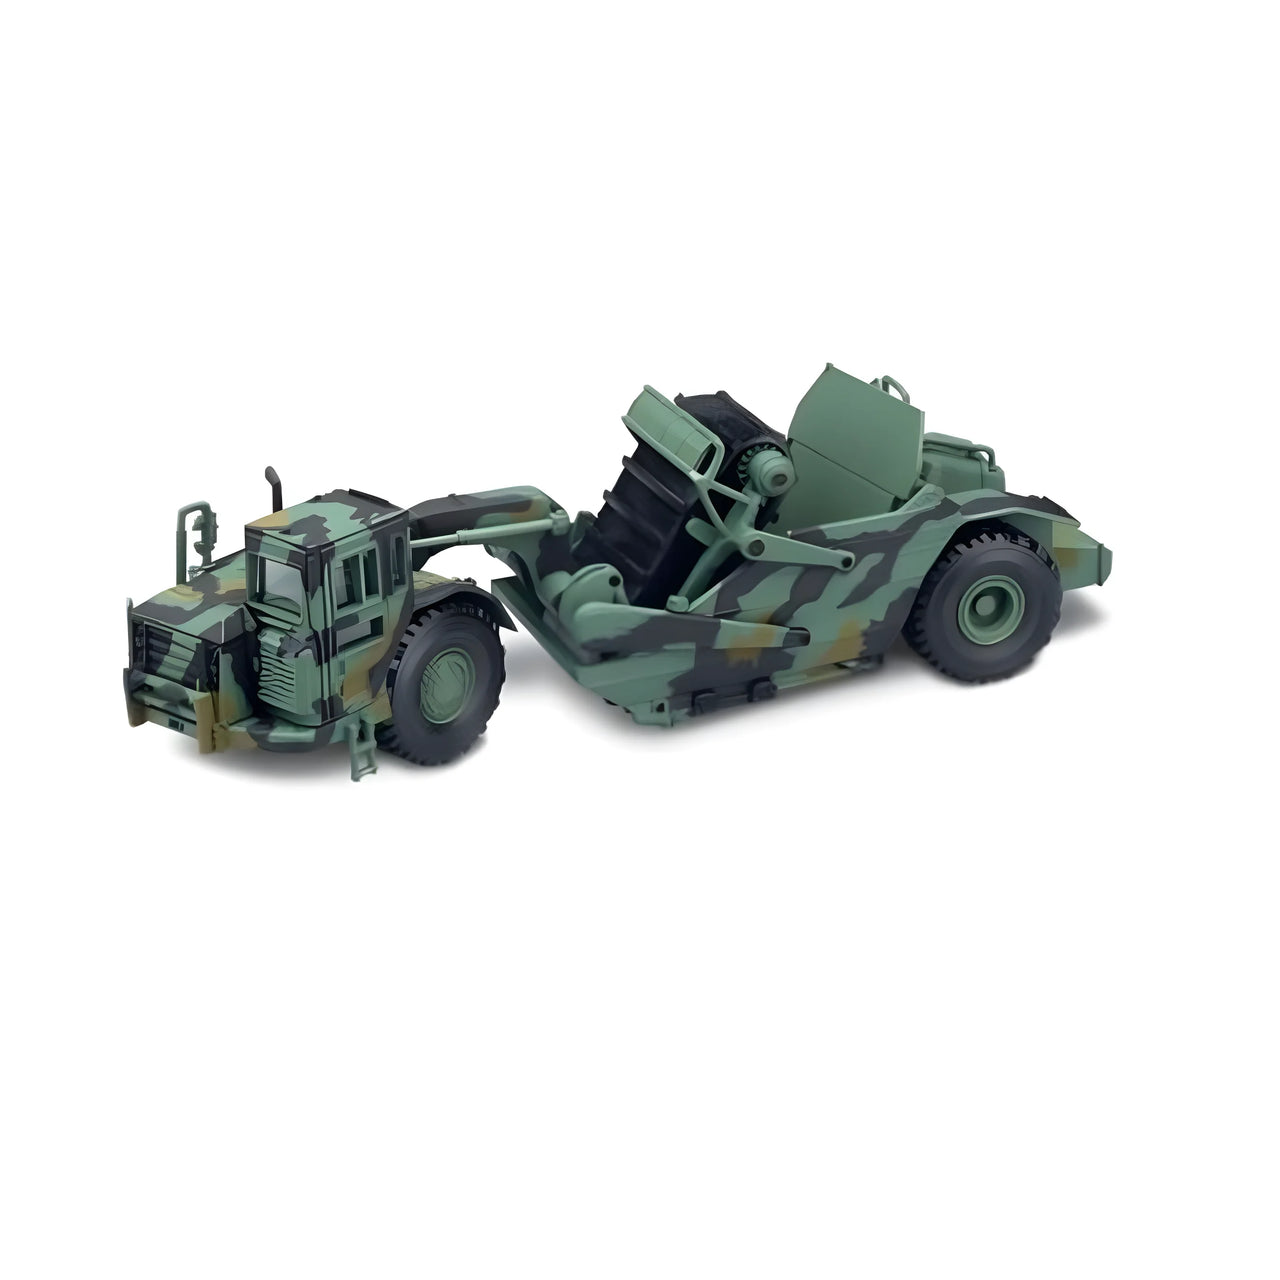 55112 Caterpillar 623G Military Wheeled Scraper 1:50 Scale (Discontinued Model)